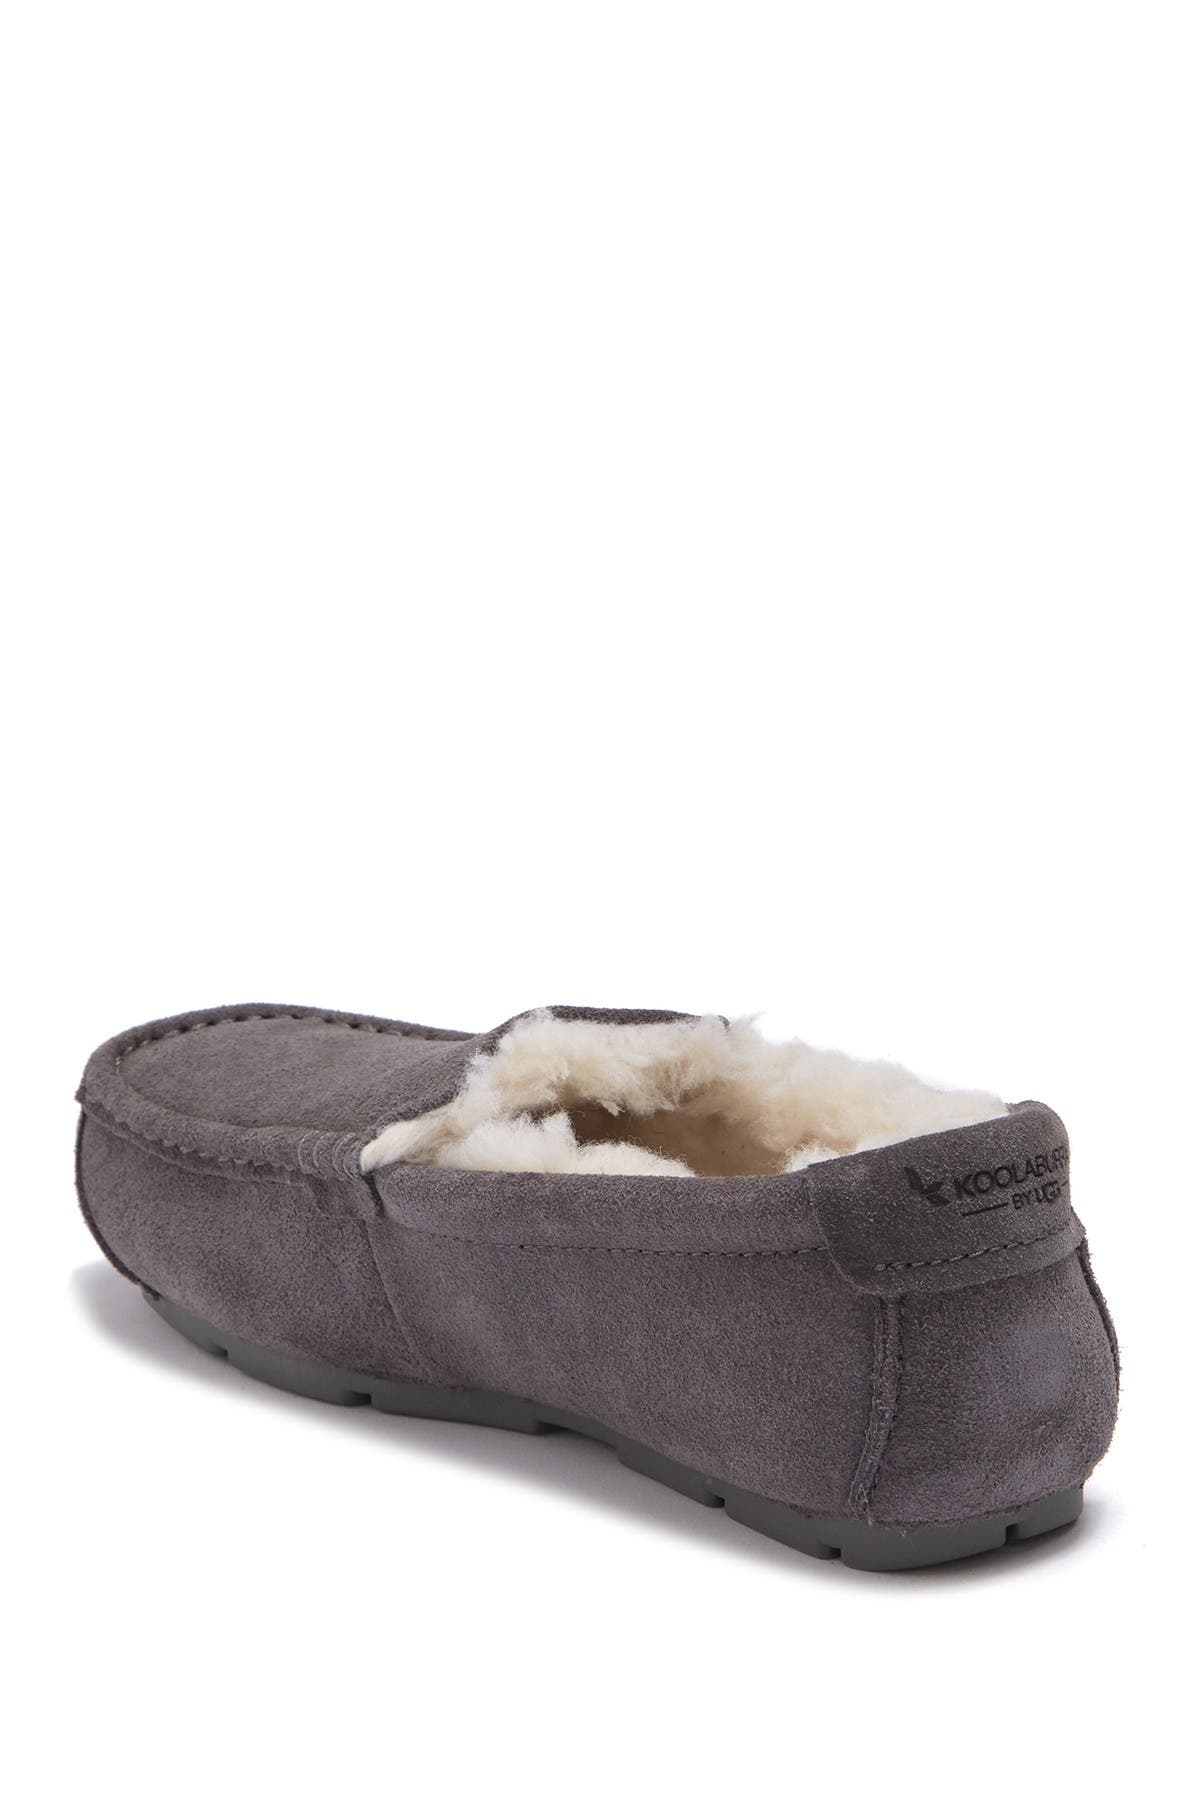 koolaburra slippers